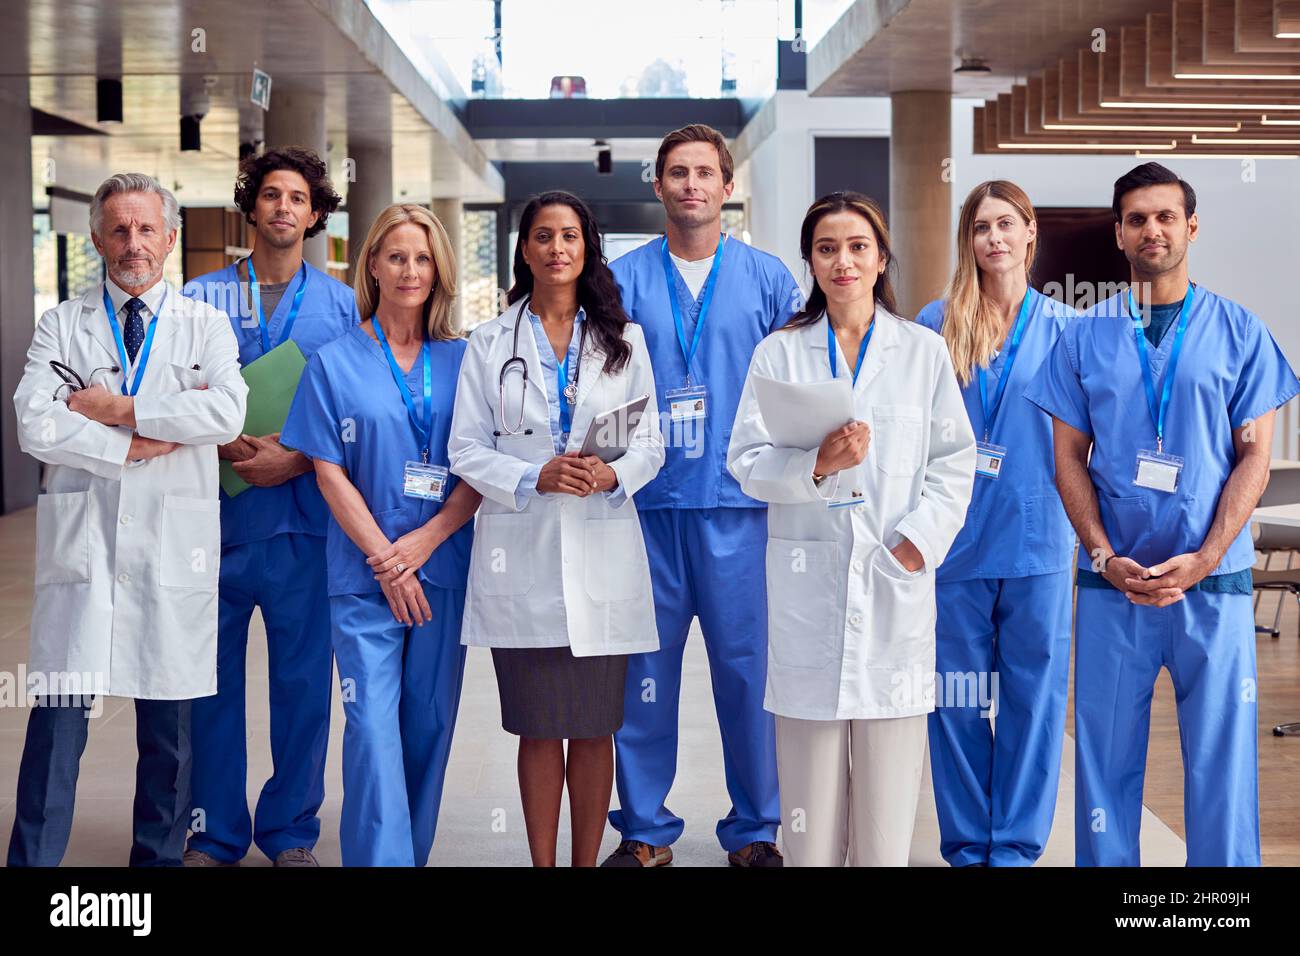 Portrait Of Multi-Cultural Medical Team Wearing Uniform Standing Inside Hospital Building Stock Photo